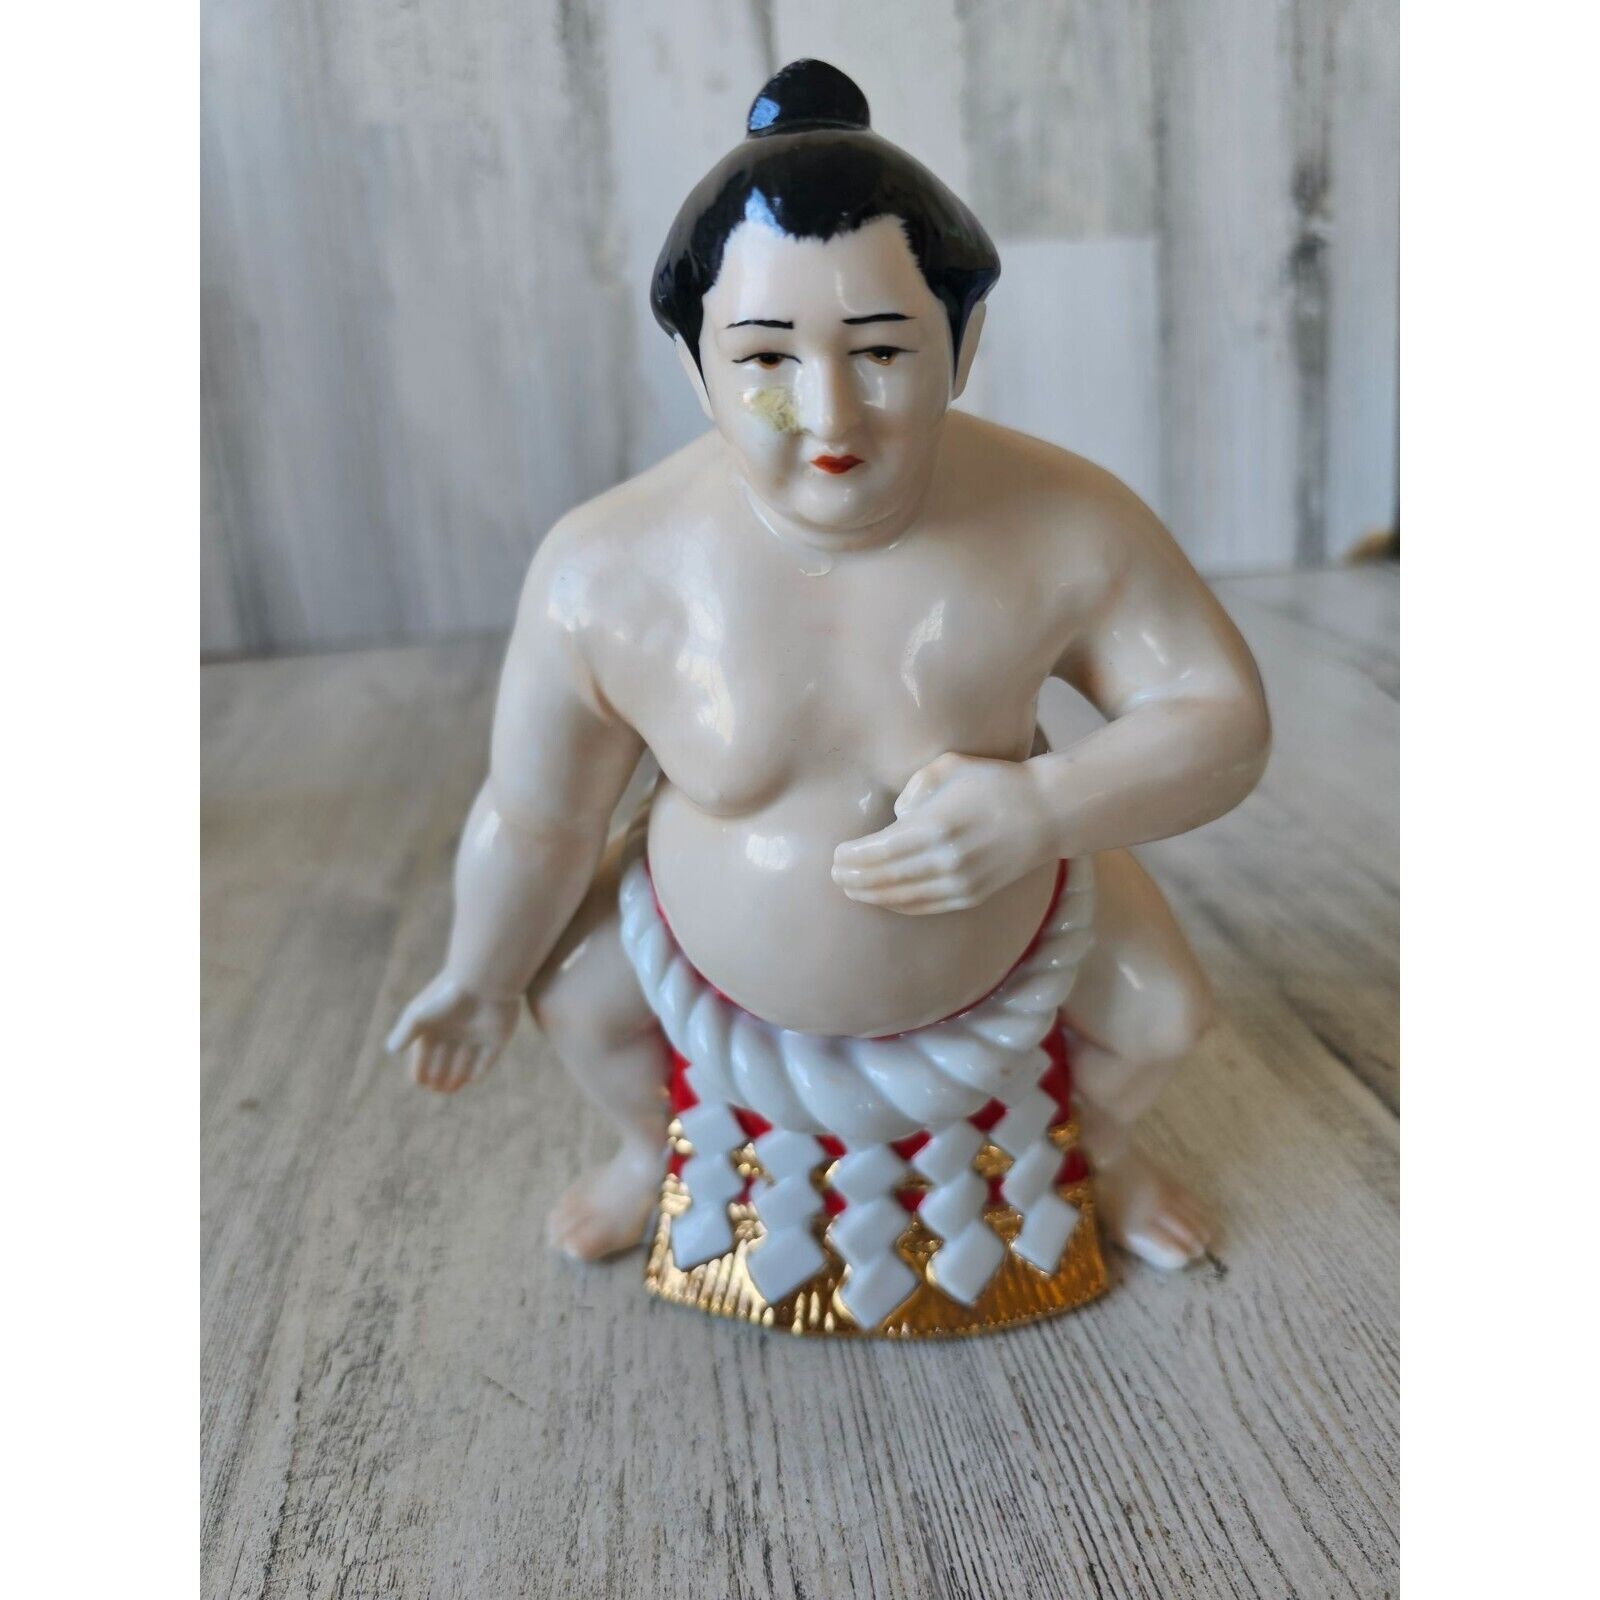 Tkn Sumo wrestler Japanese statue figurine vintage